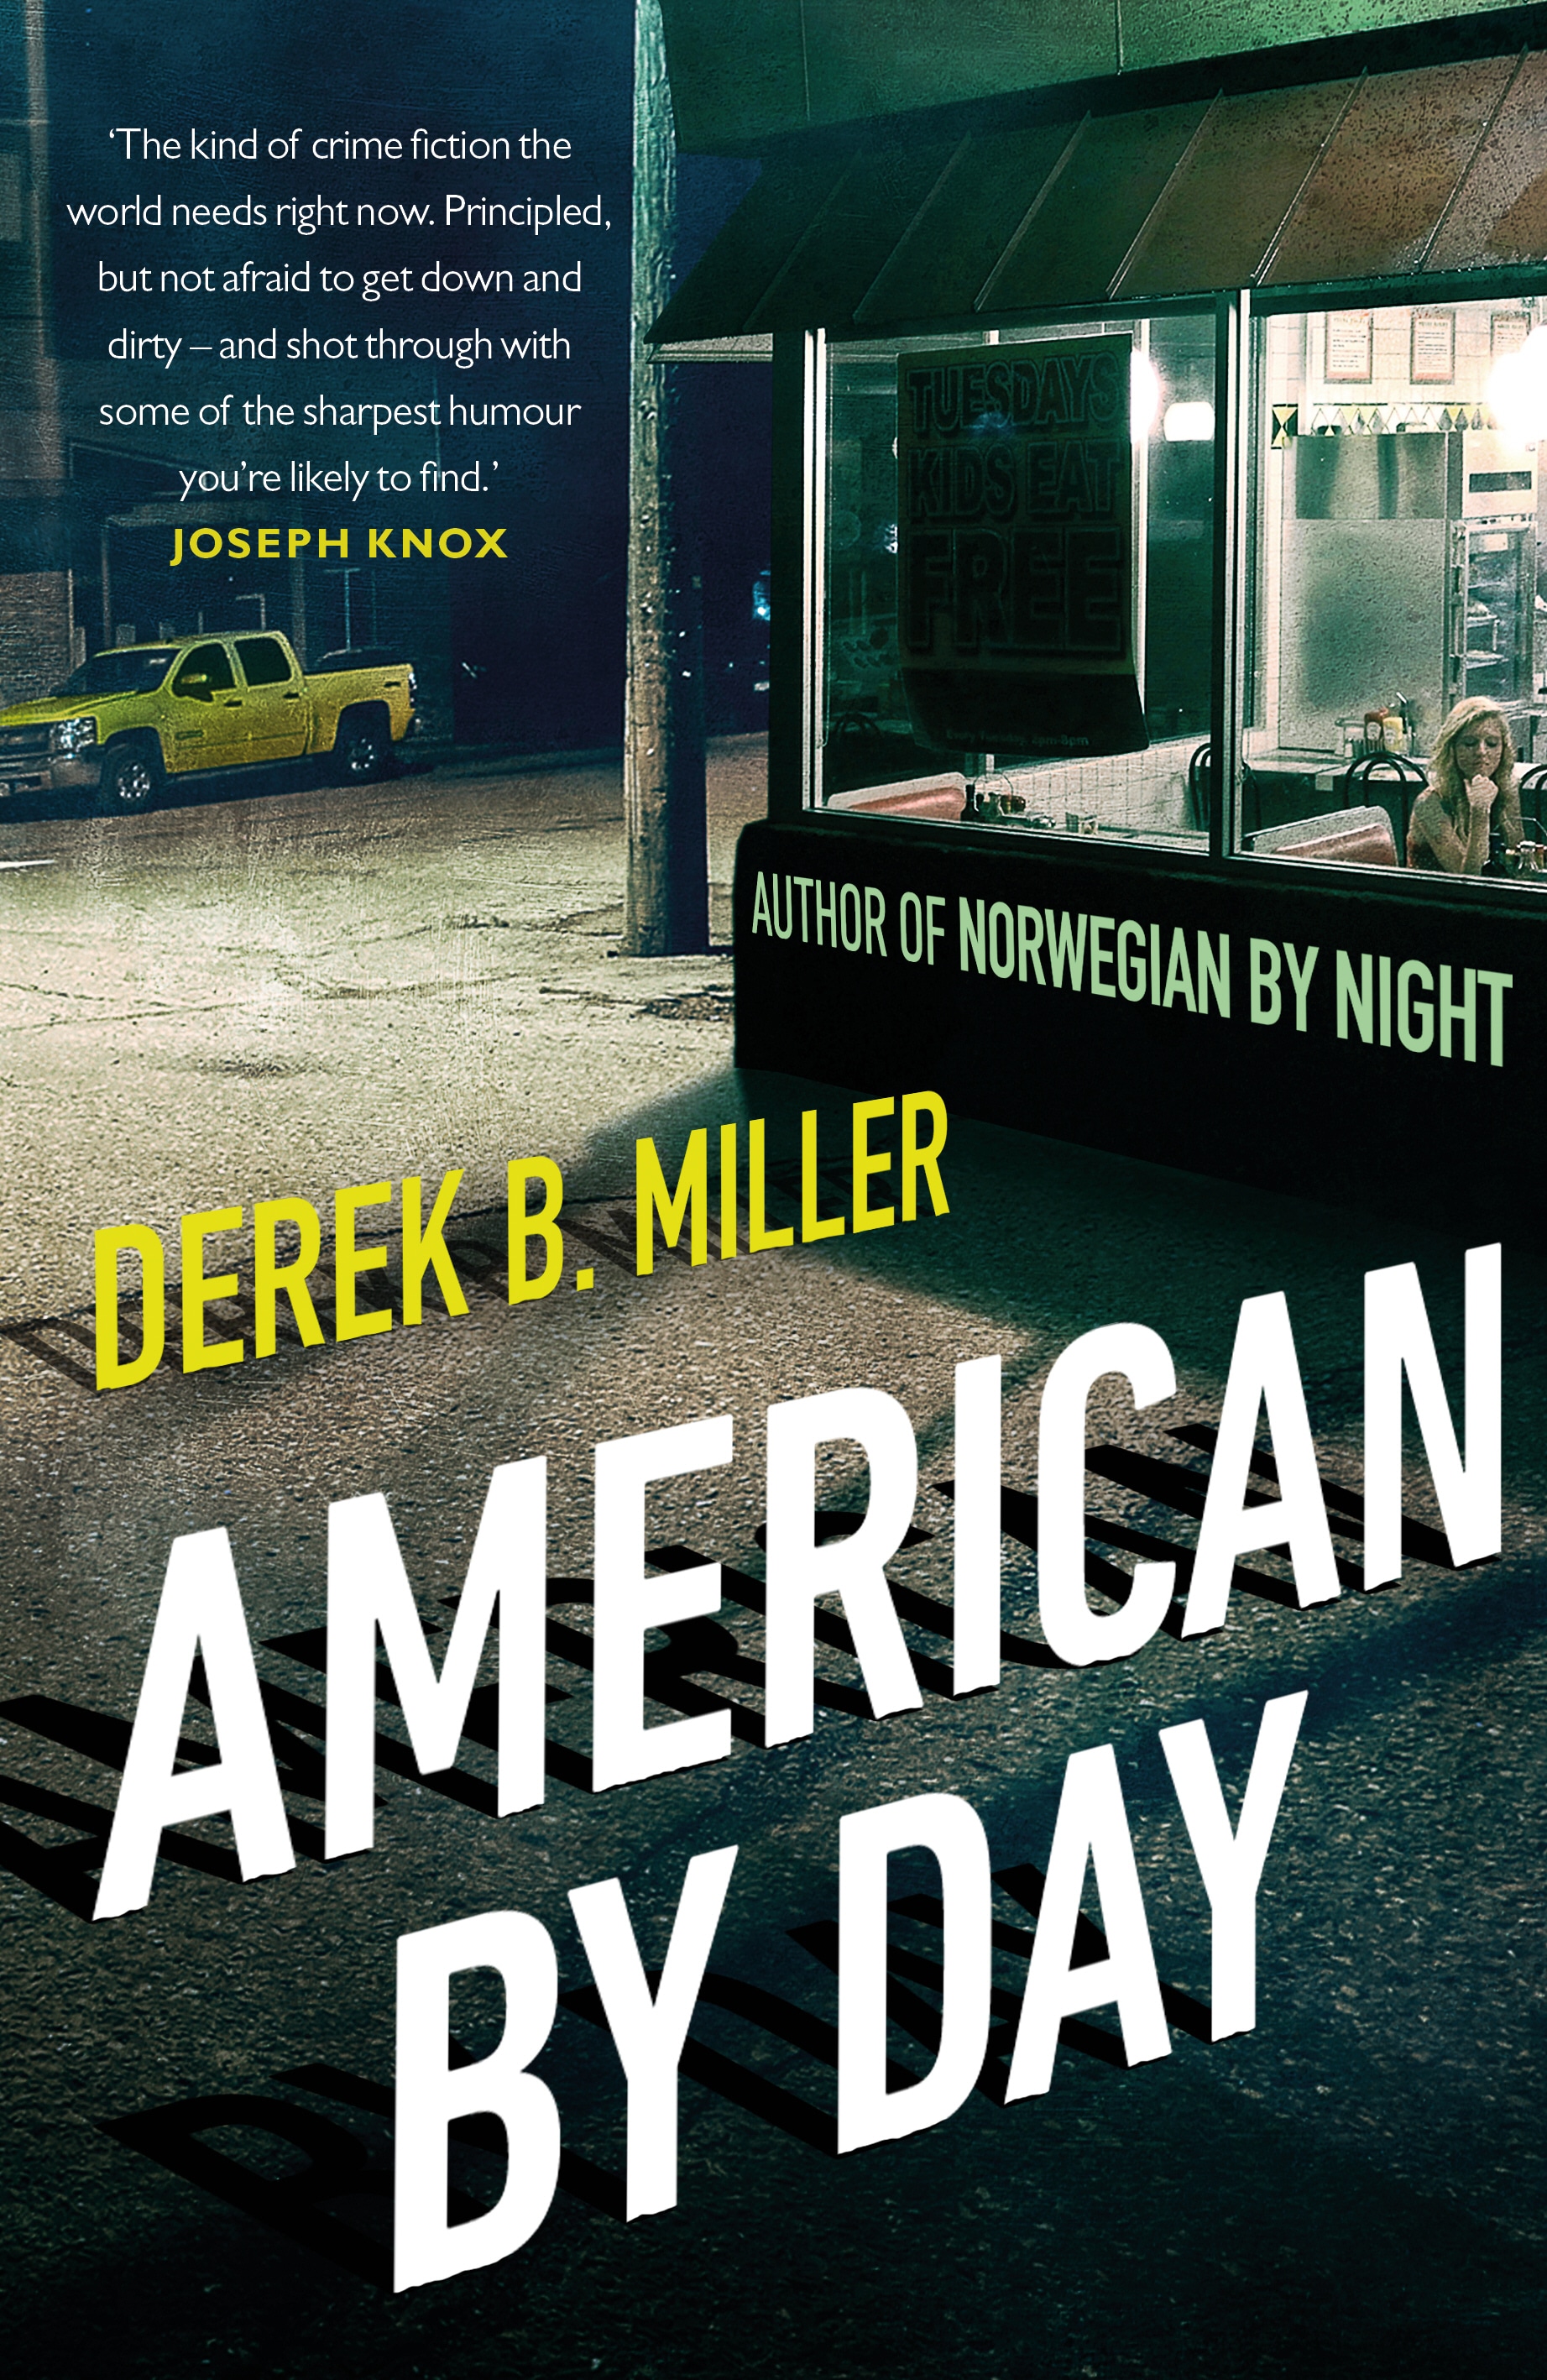 Book “American By Day” by Derek B. Miller — February 21, 2019